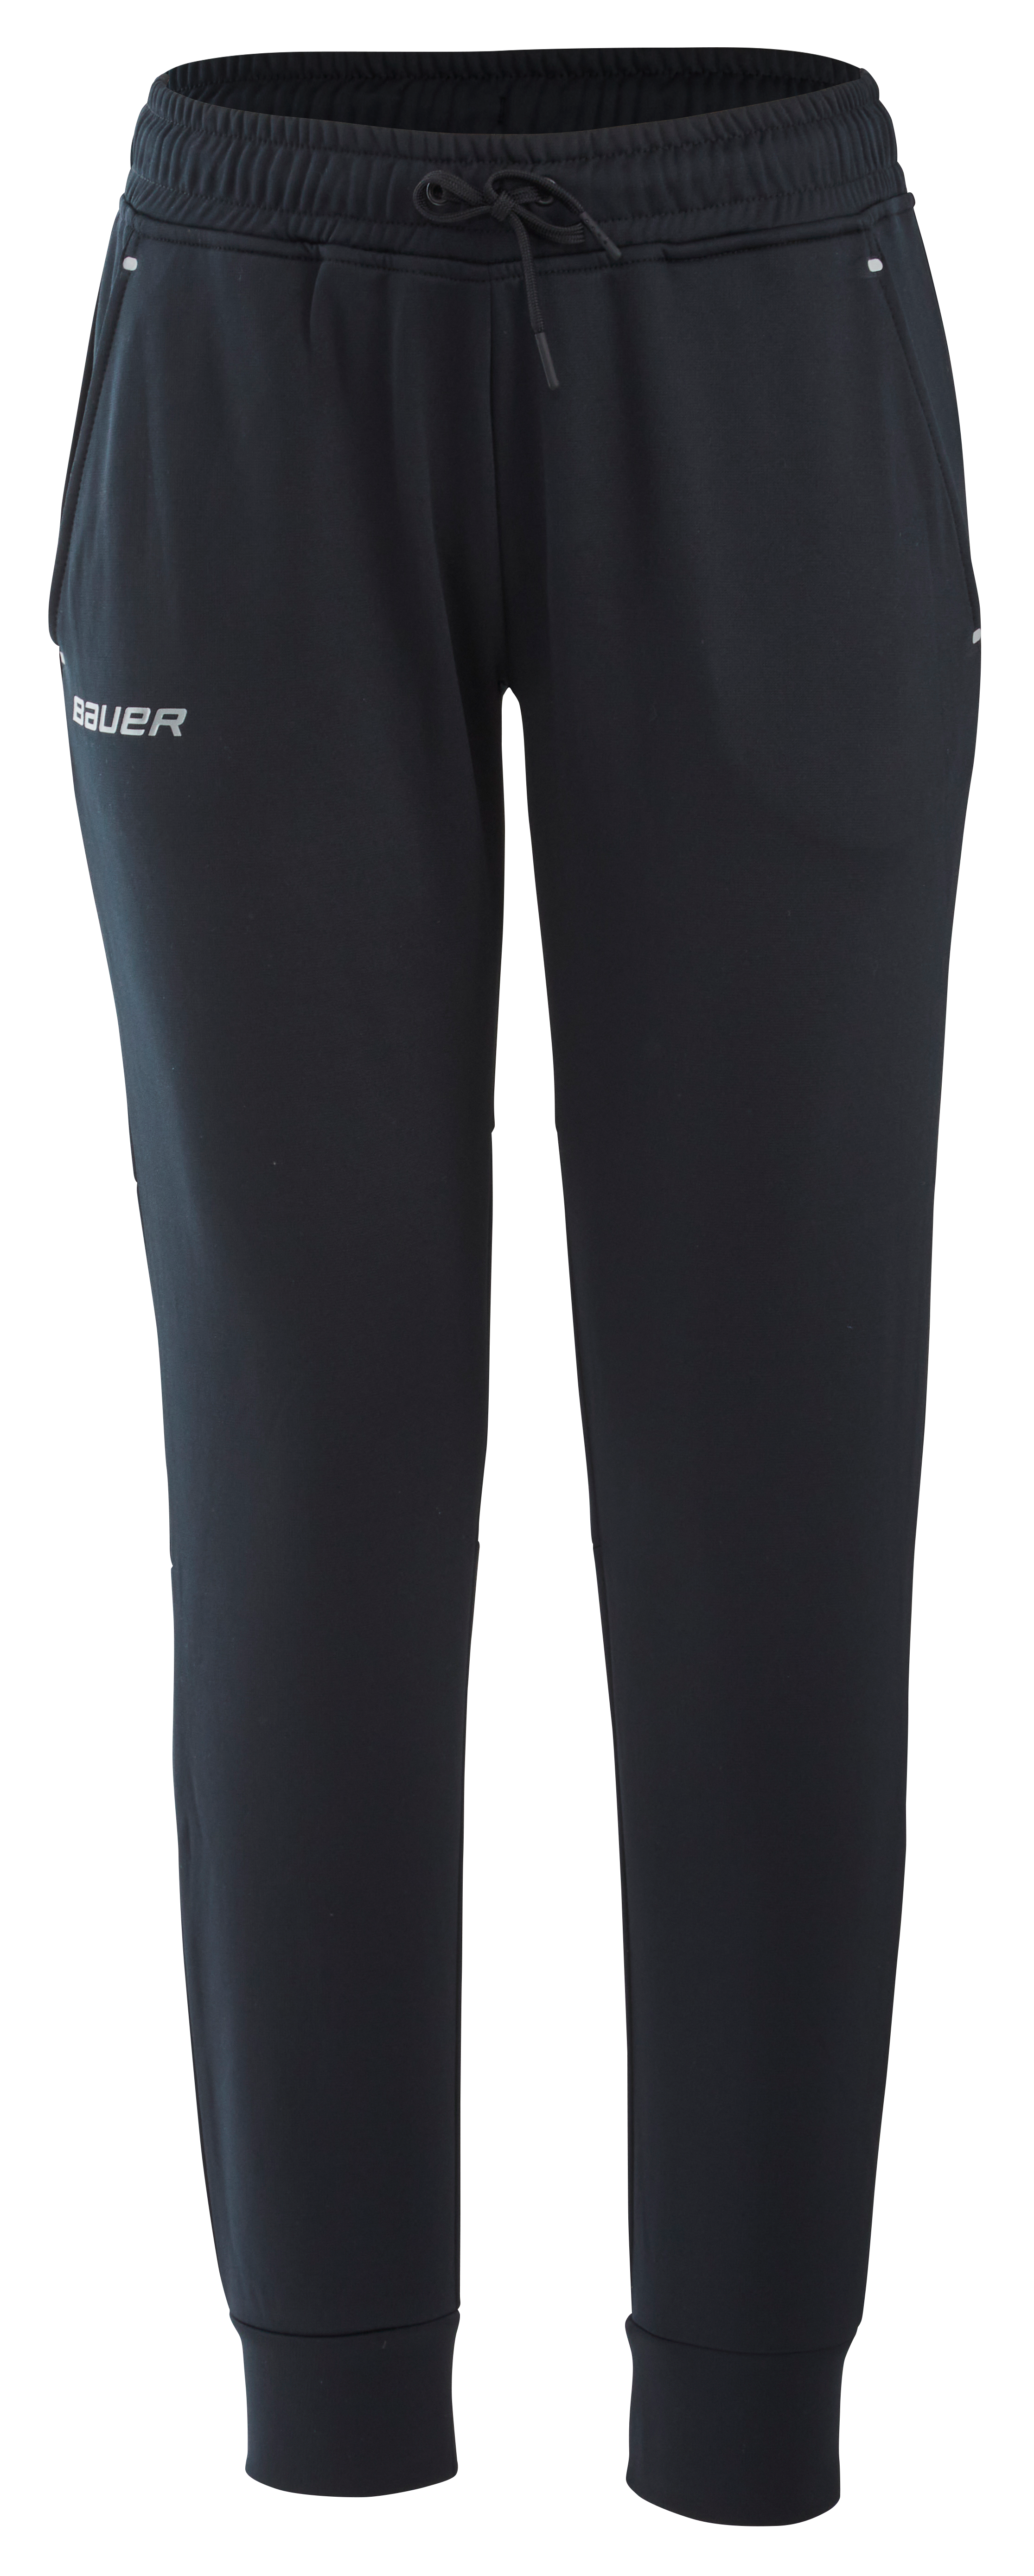 LA Gear Interlock Jogging Pants Ladies Black, £4.00